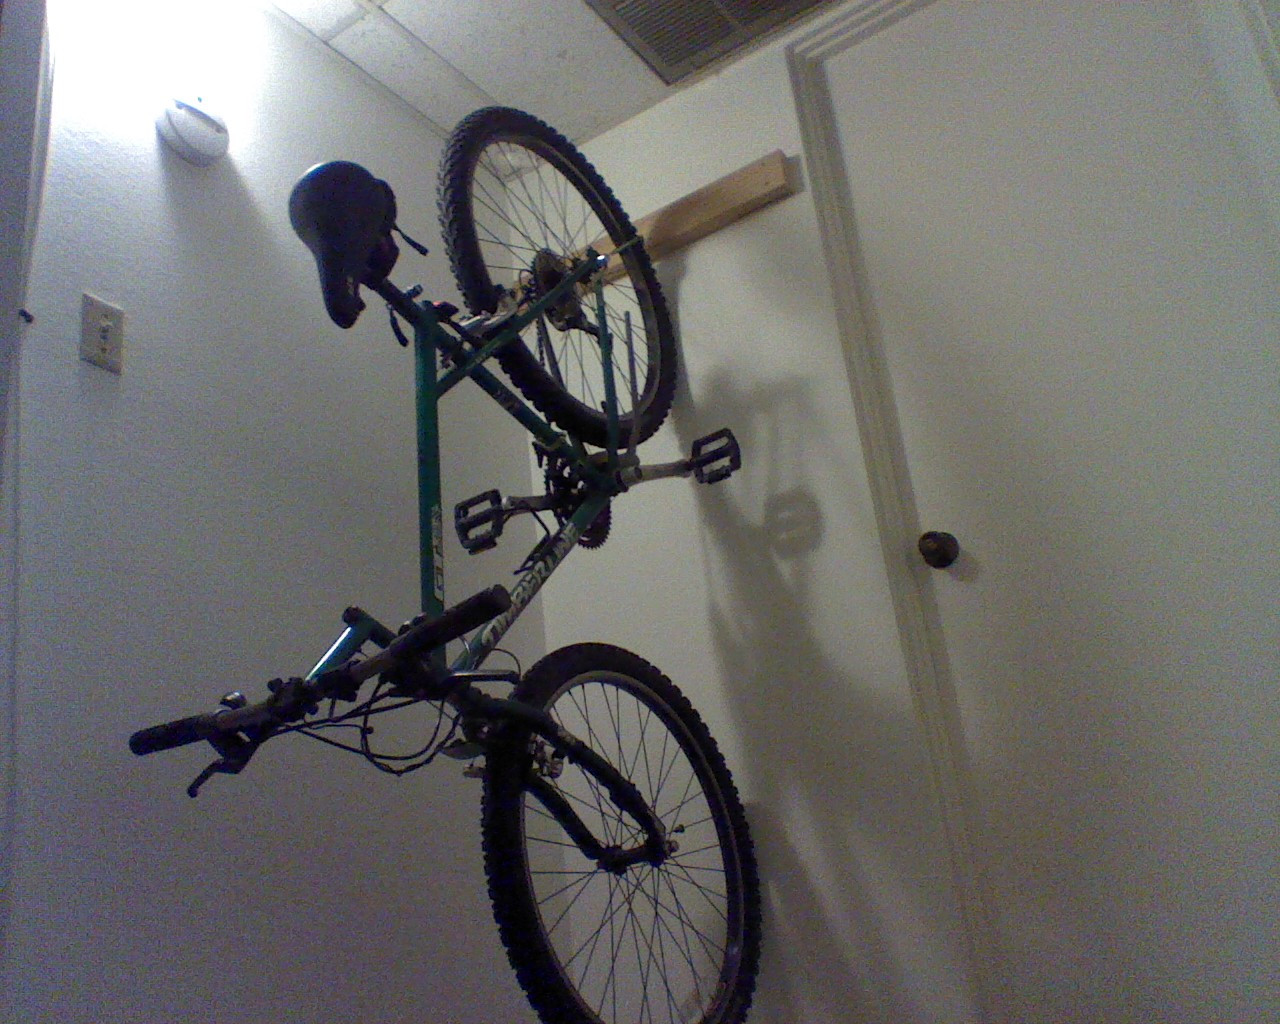 Best ideas about DIY Wall Bike Rack
. Save or Pin Homemade DIY bike wall hanger rack Now.